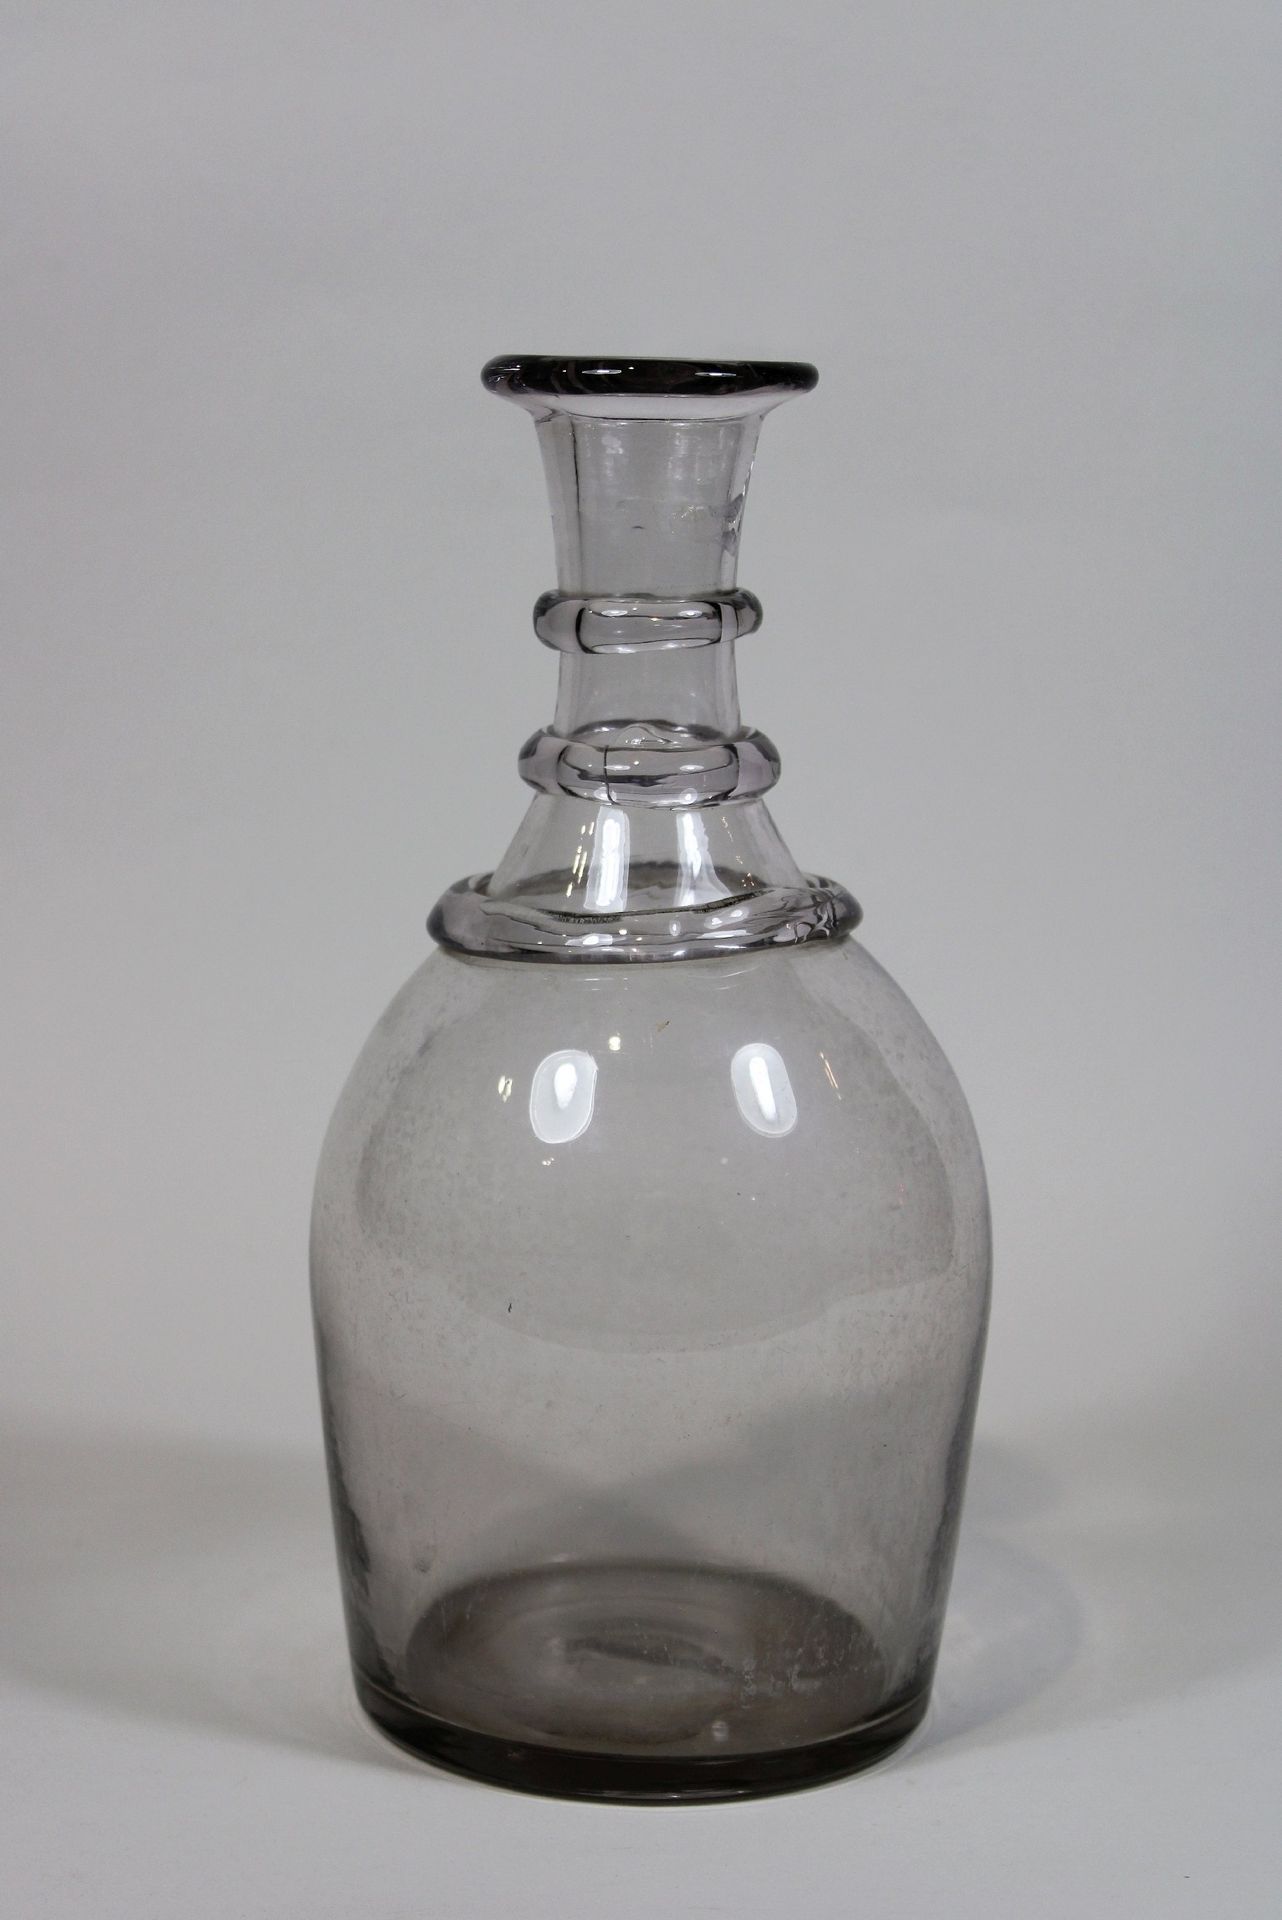 Weinkaraffe, mundgeblasen 酒杯，口吹，大概18或19世纪，颈部有环，高：约25厘米，容量约1-1.5升，有使用痕迹，状况与年代相称。